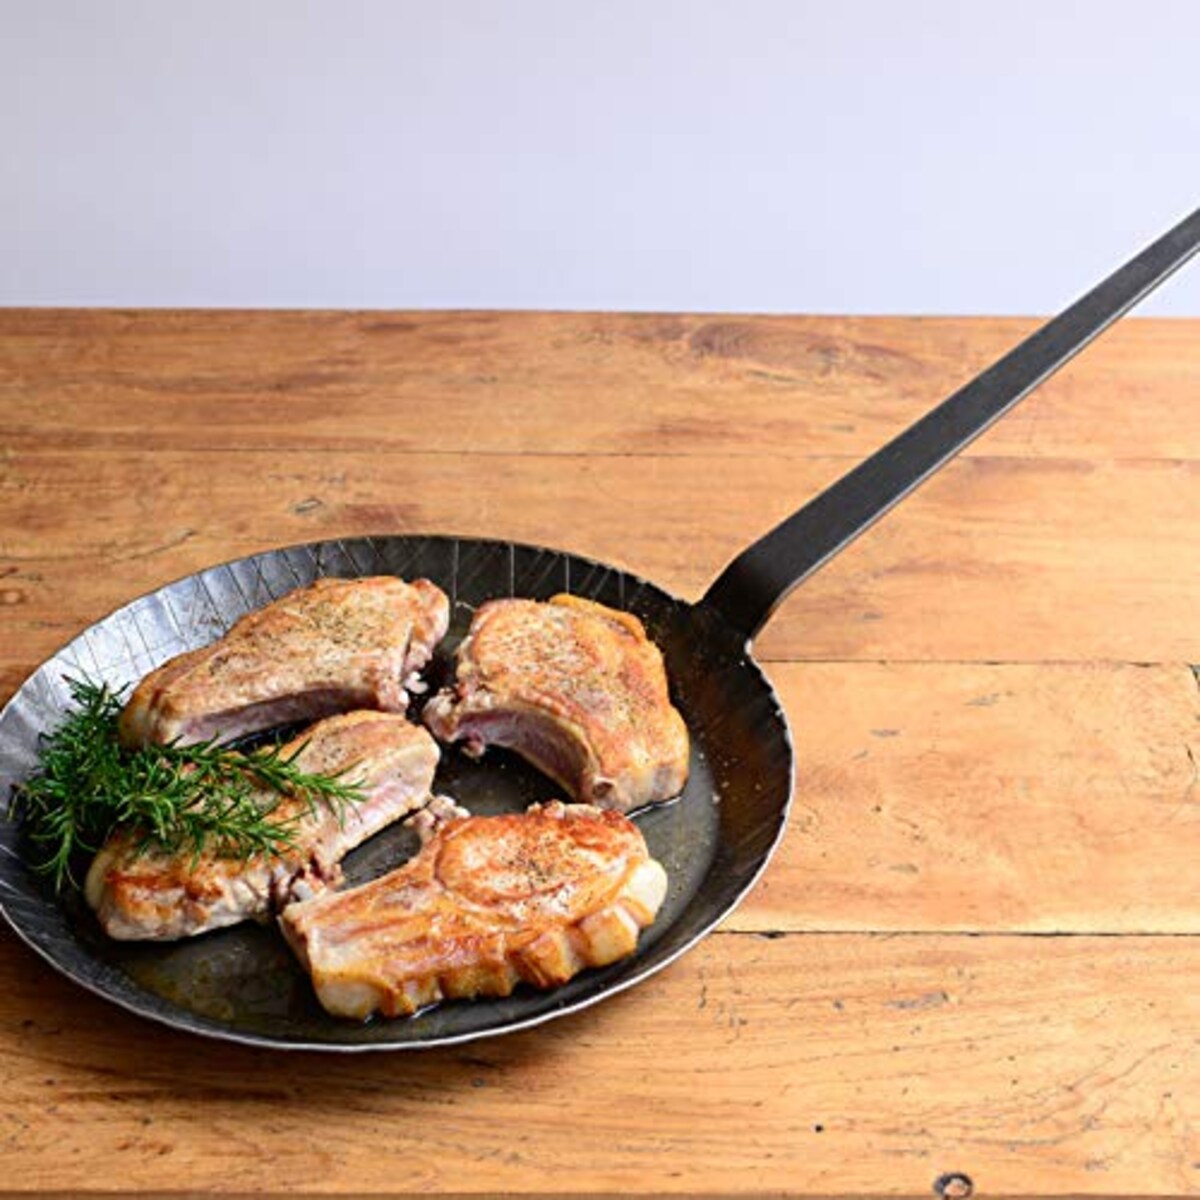  【Amazon.co.jp 限定】 TURK ターク プレスパン 浅型36cm [日本正規販売品]画像5 